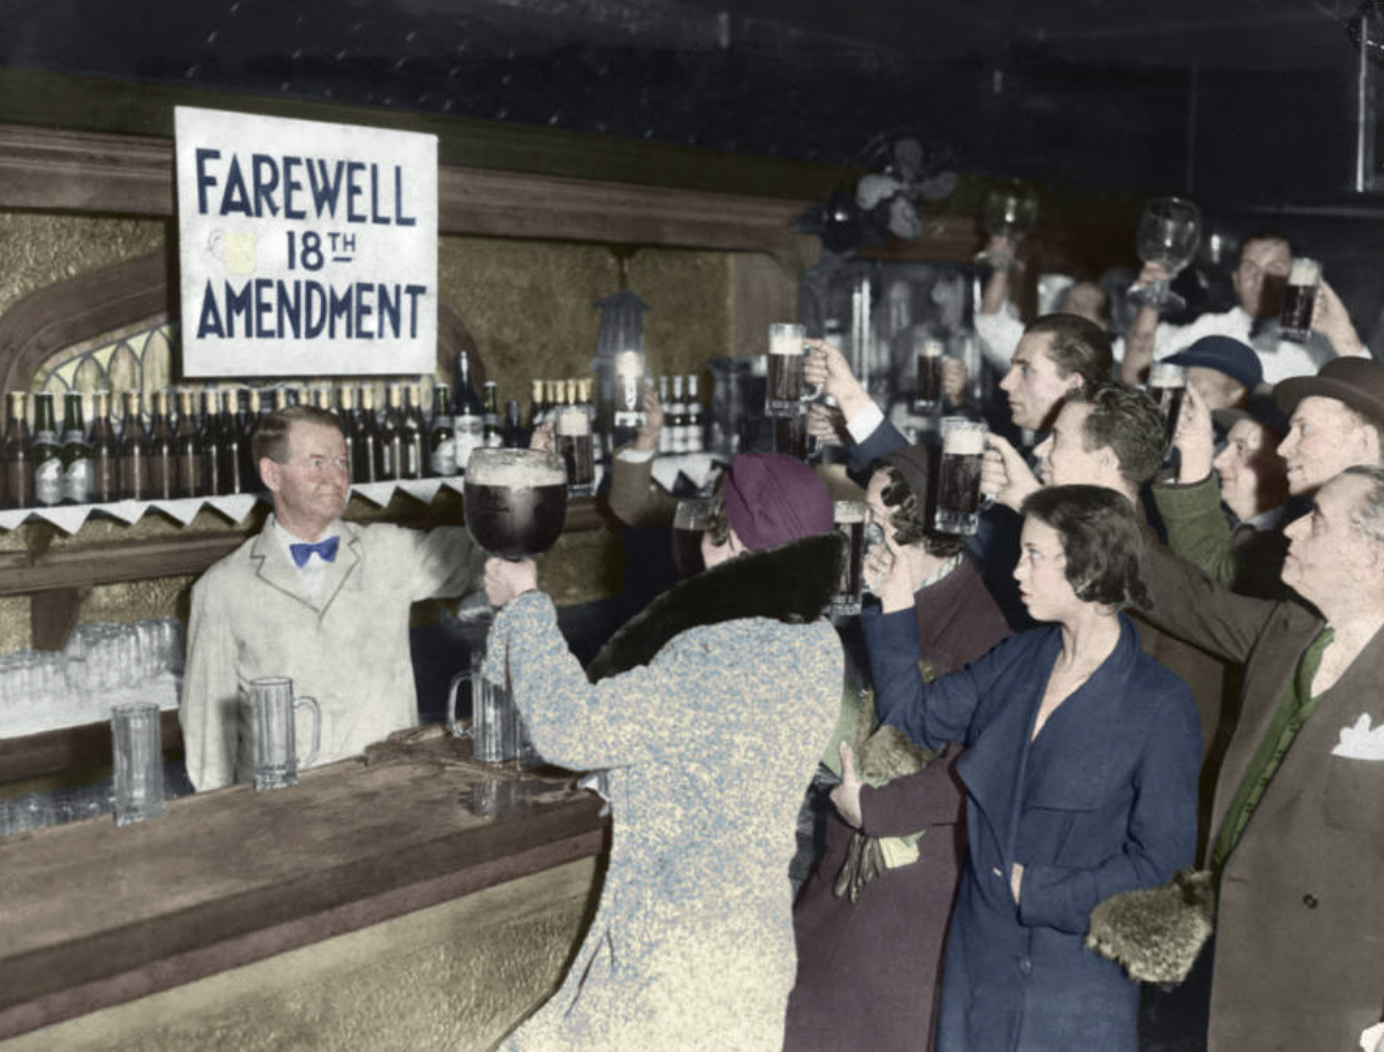 speakeasy photography - Farewell 18TH Amendment